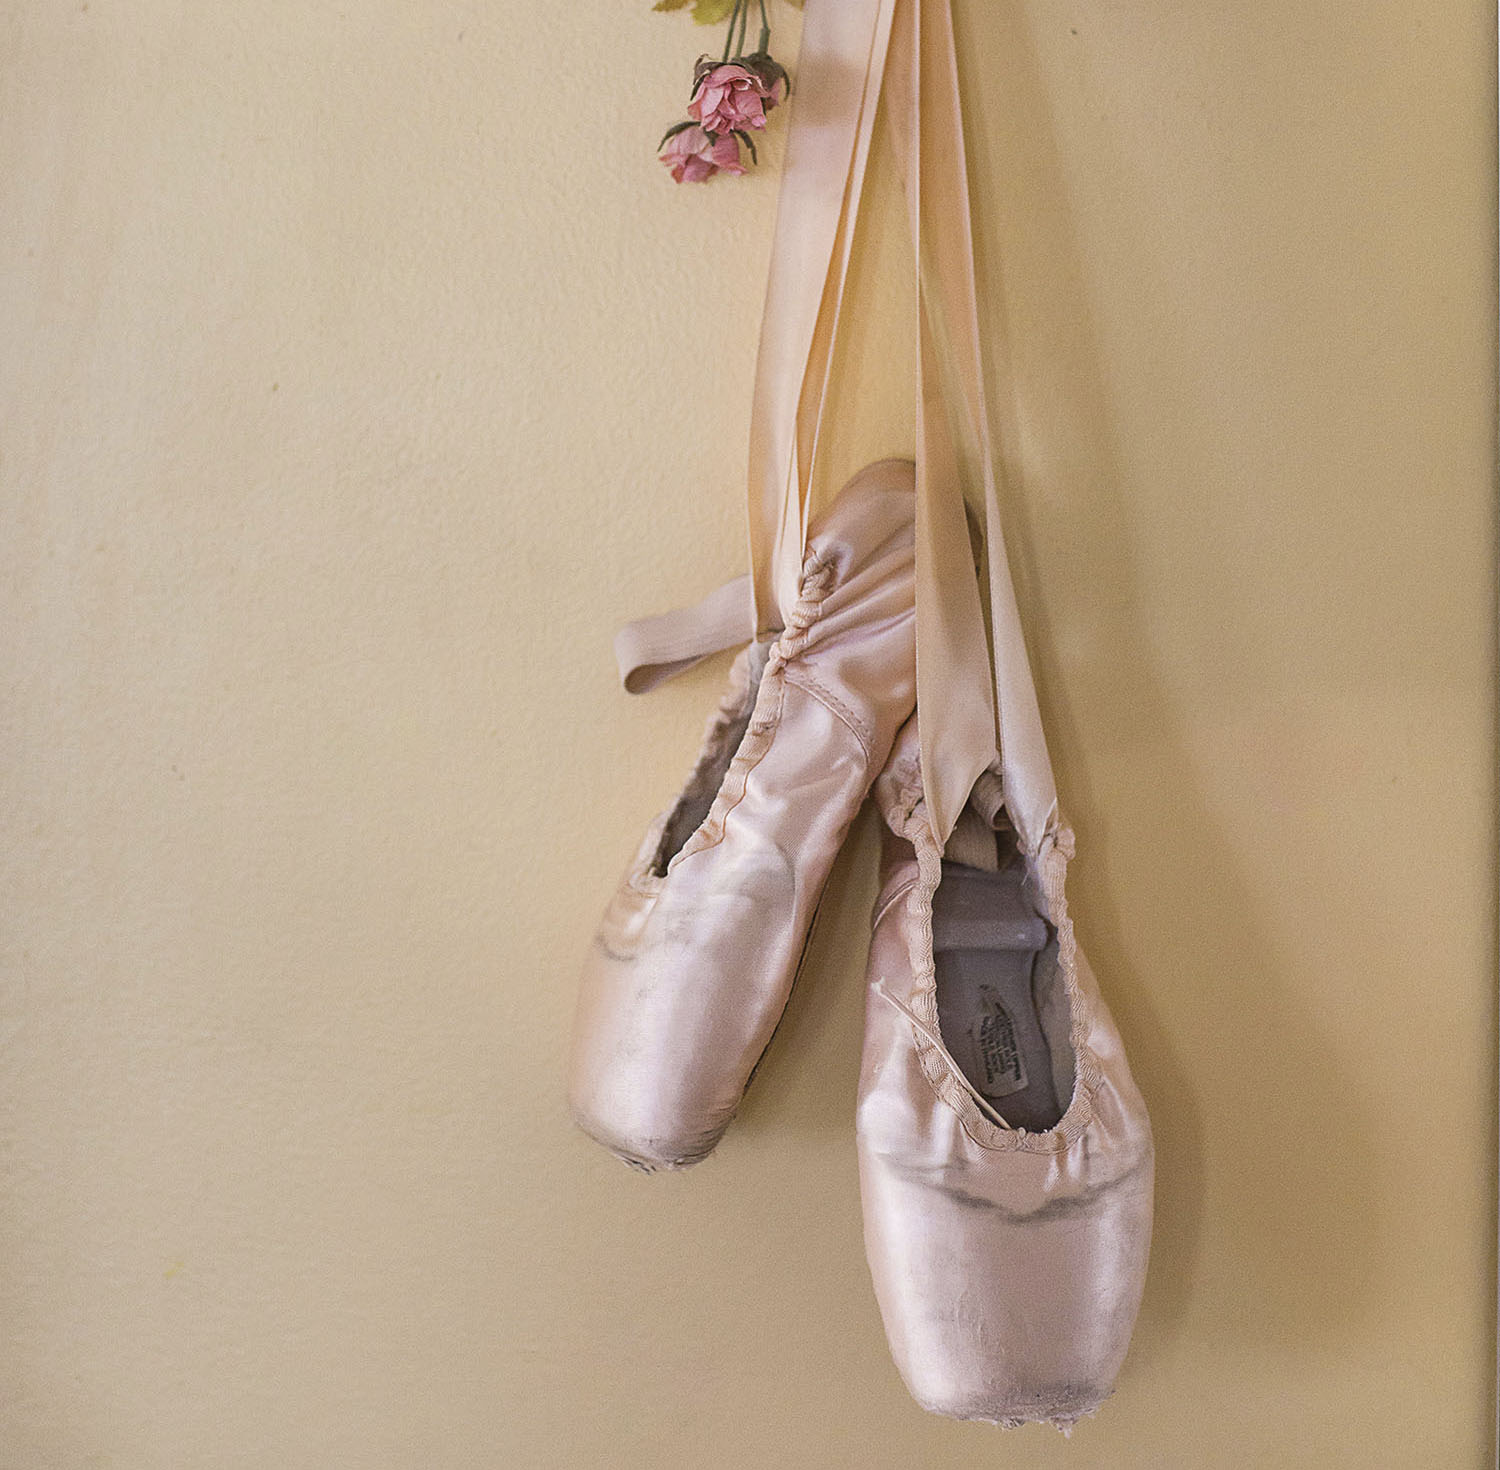 Kristoferson's ballet slippers. Photo by Tim Robison